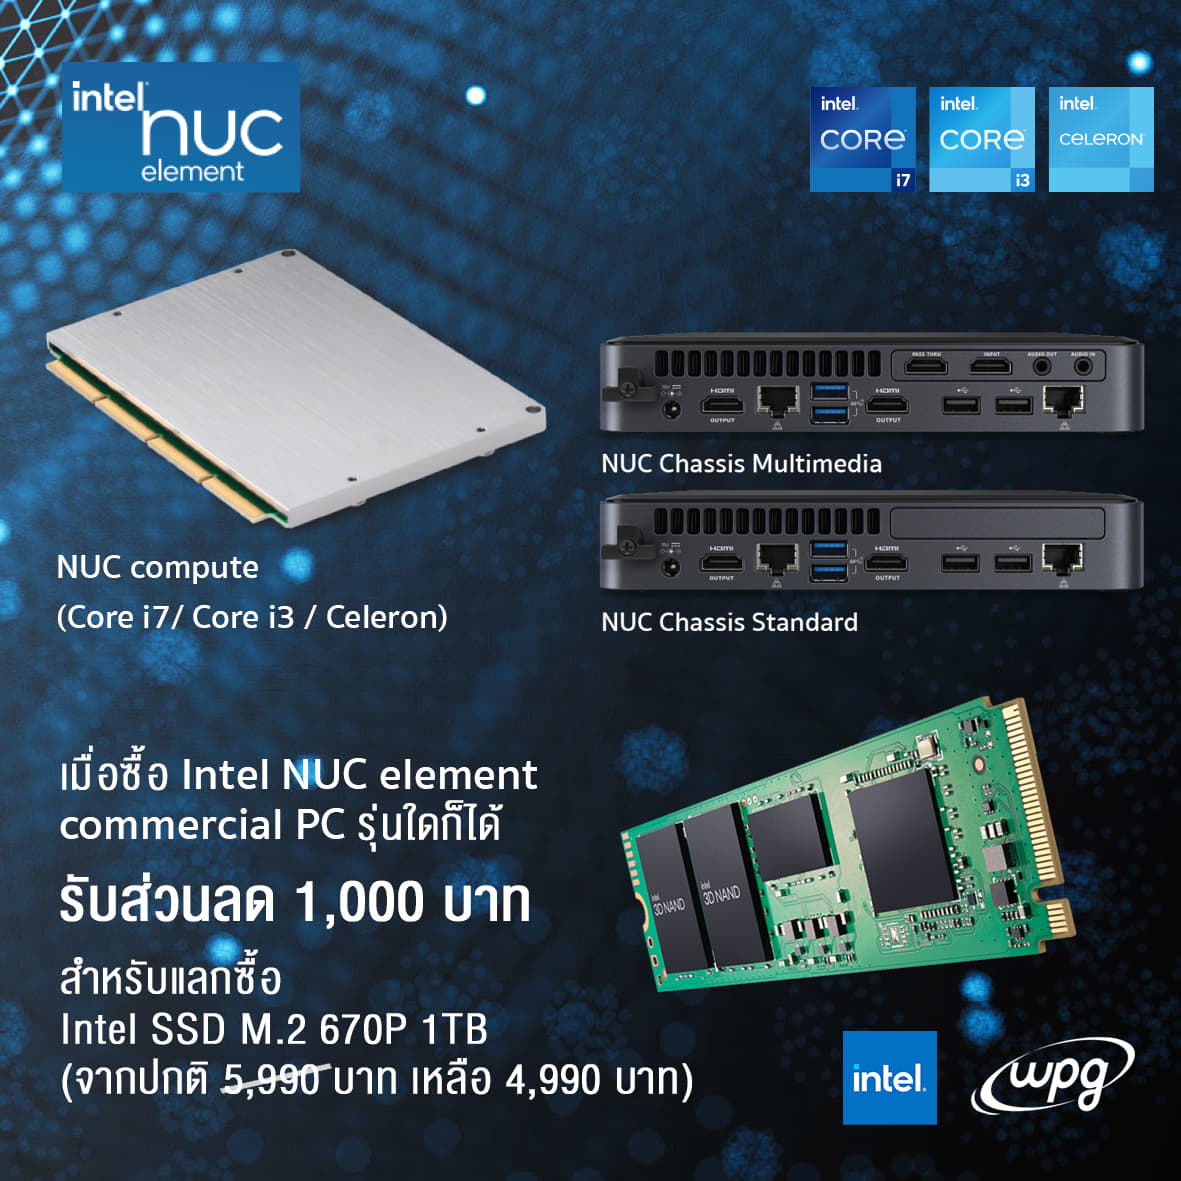 185425146 907108893355022 6105858448718333801 n โปรโมชั่นแพ็คคู่…. เมื่อซื้อ Intel NUC Performance Kit (Core i7 /i5 / i3) หรือ Intel NUC Element commercial PC (Core i7/i3/Celeron) 